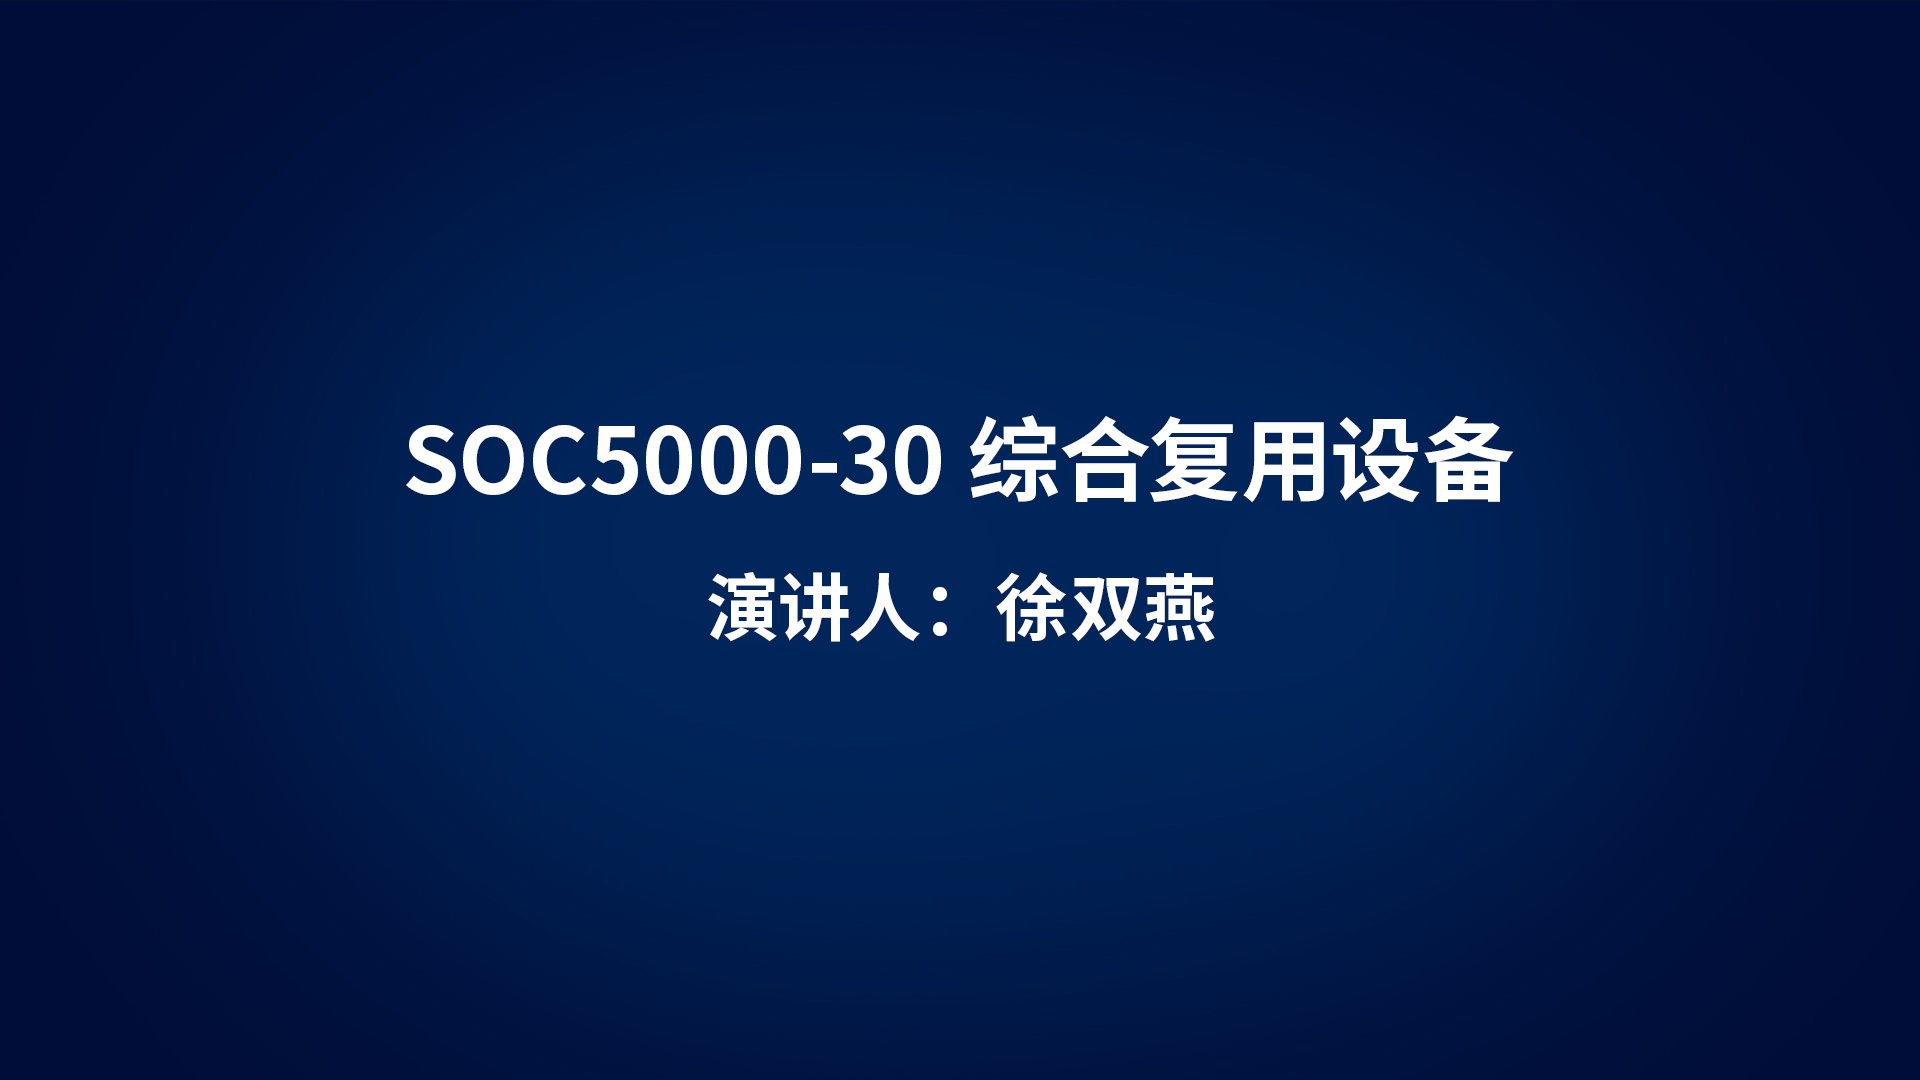 SOC5000-30 comprehensive multiplexing equipment